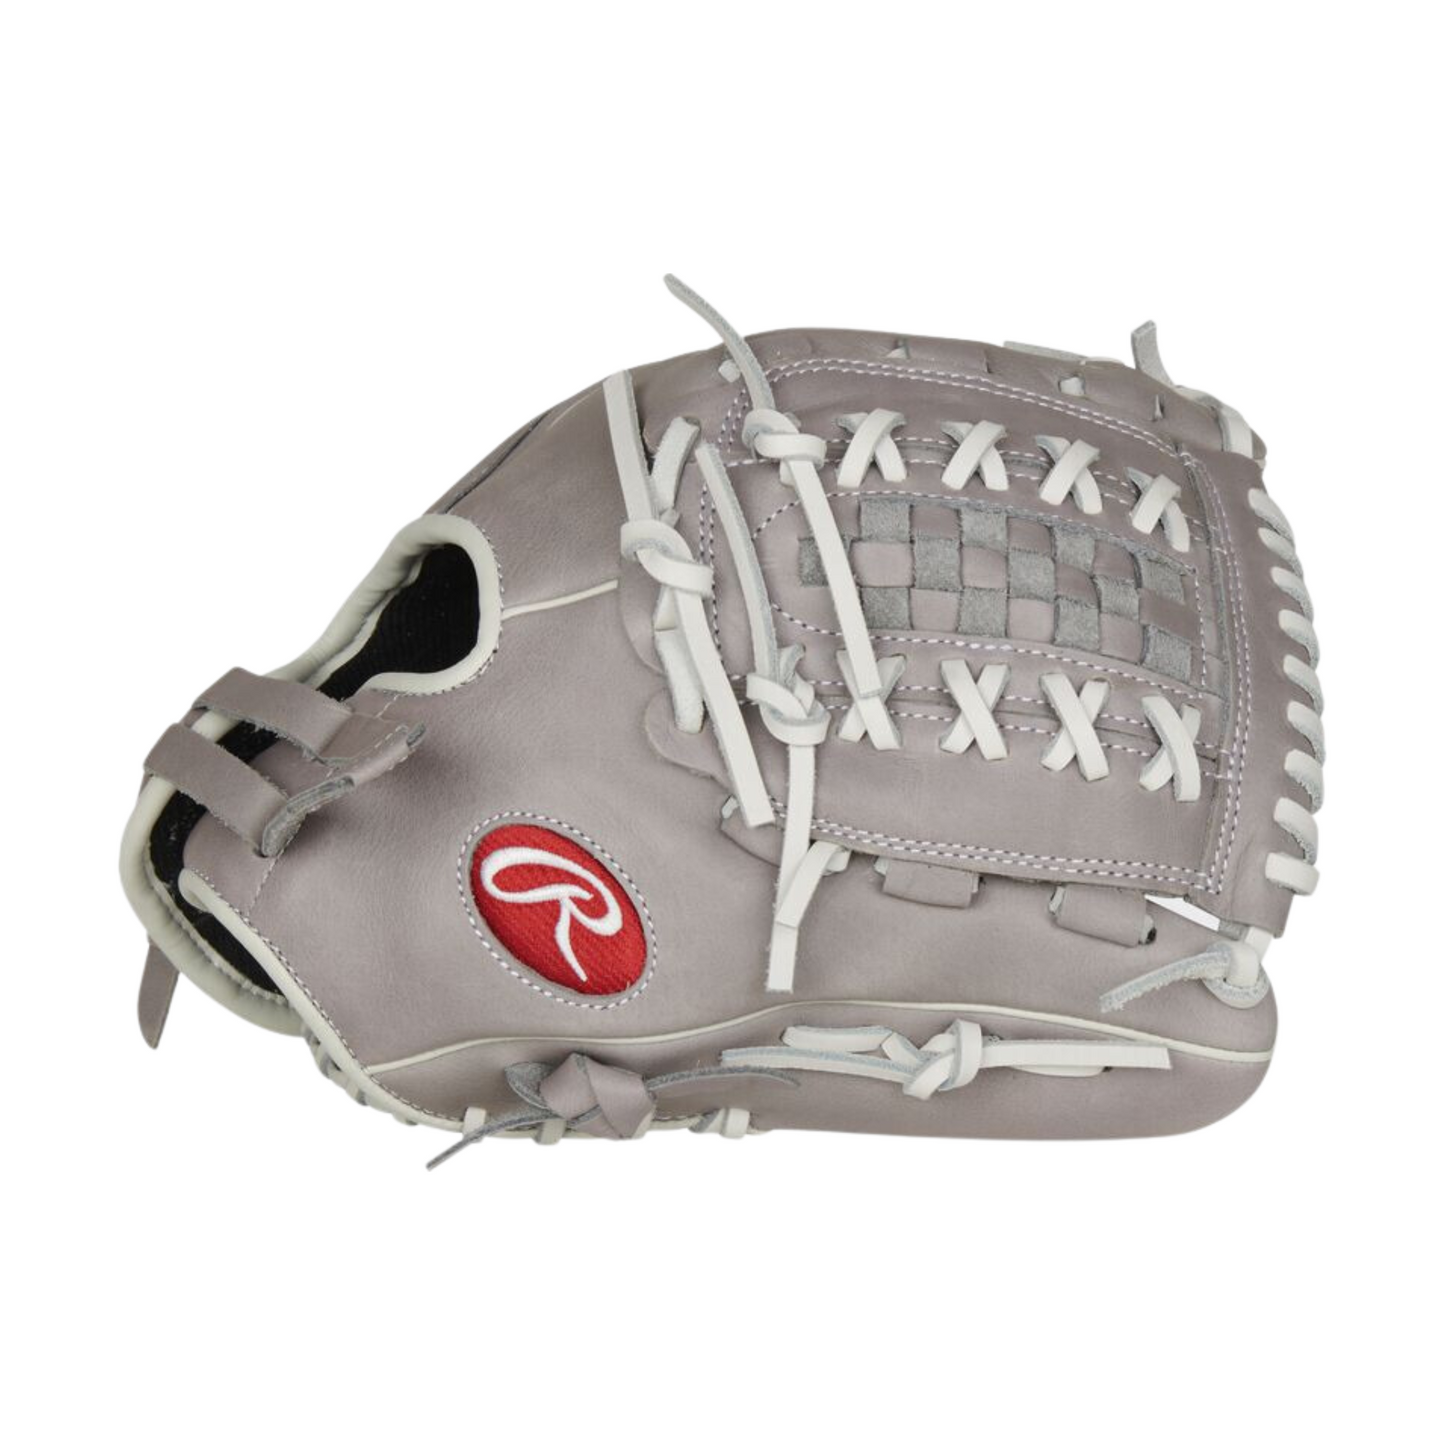 Rawlings R9 Softball Glove 11.75"